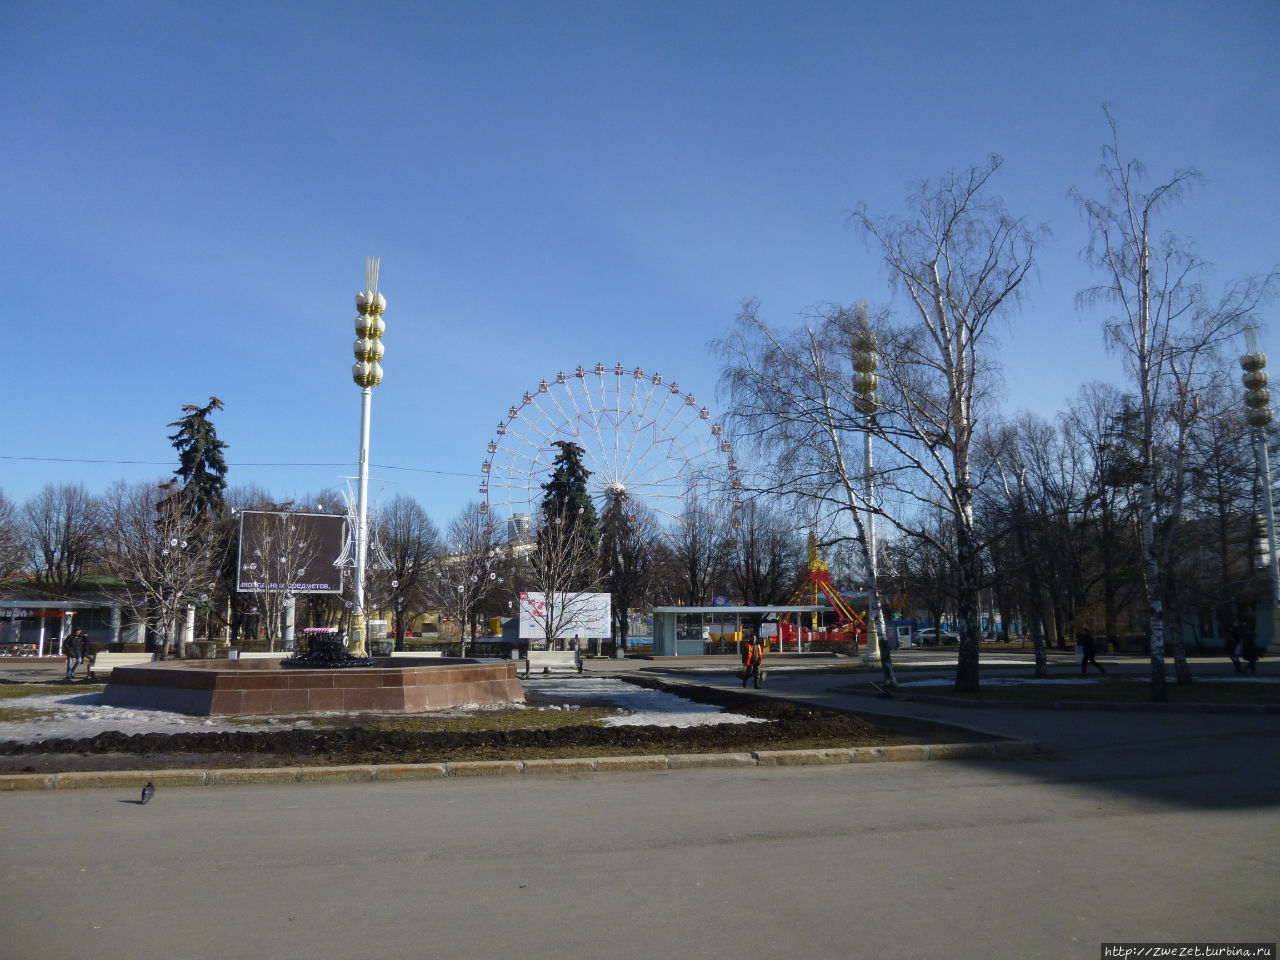 Прогулка вокруг Храма Коммунизма Москва, Россия